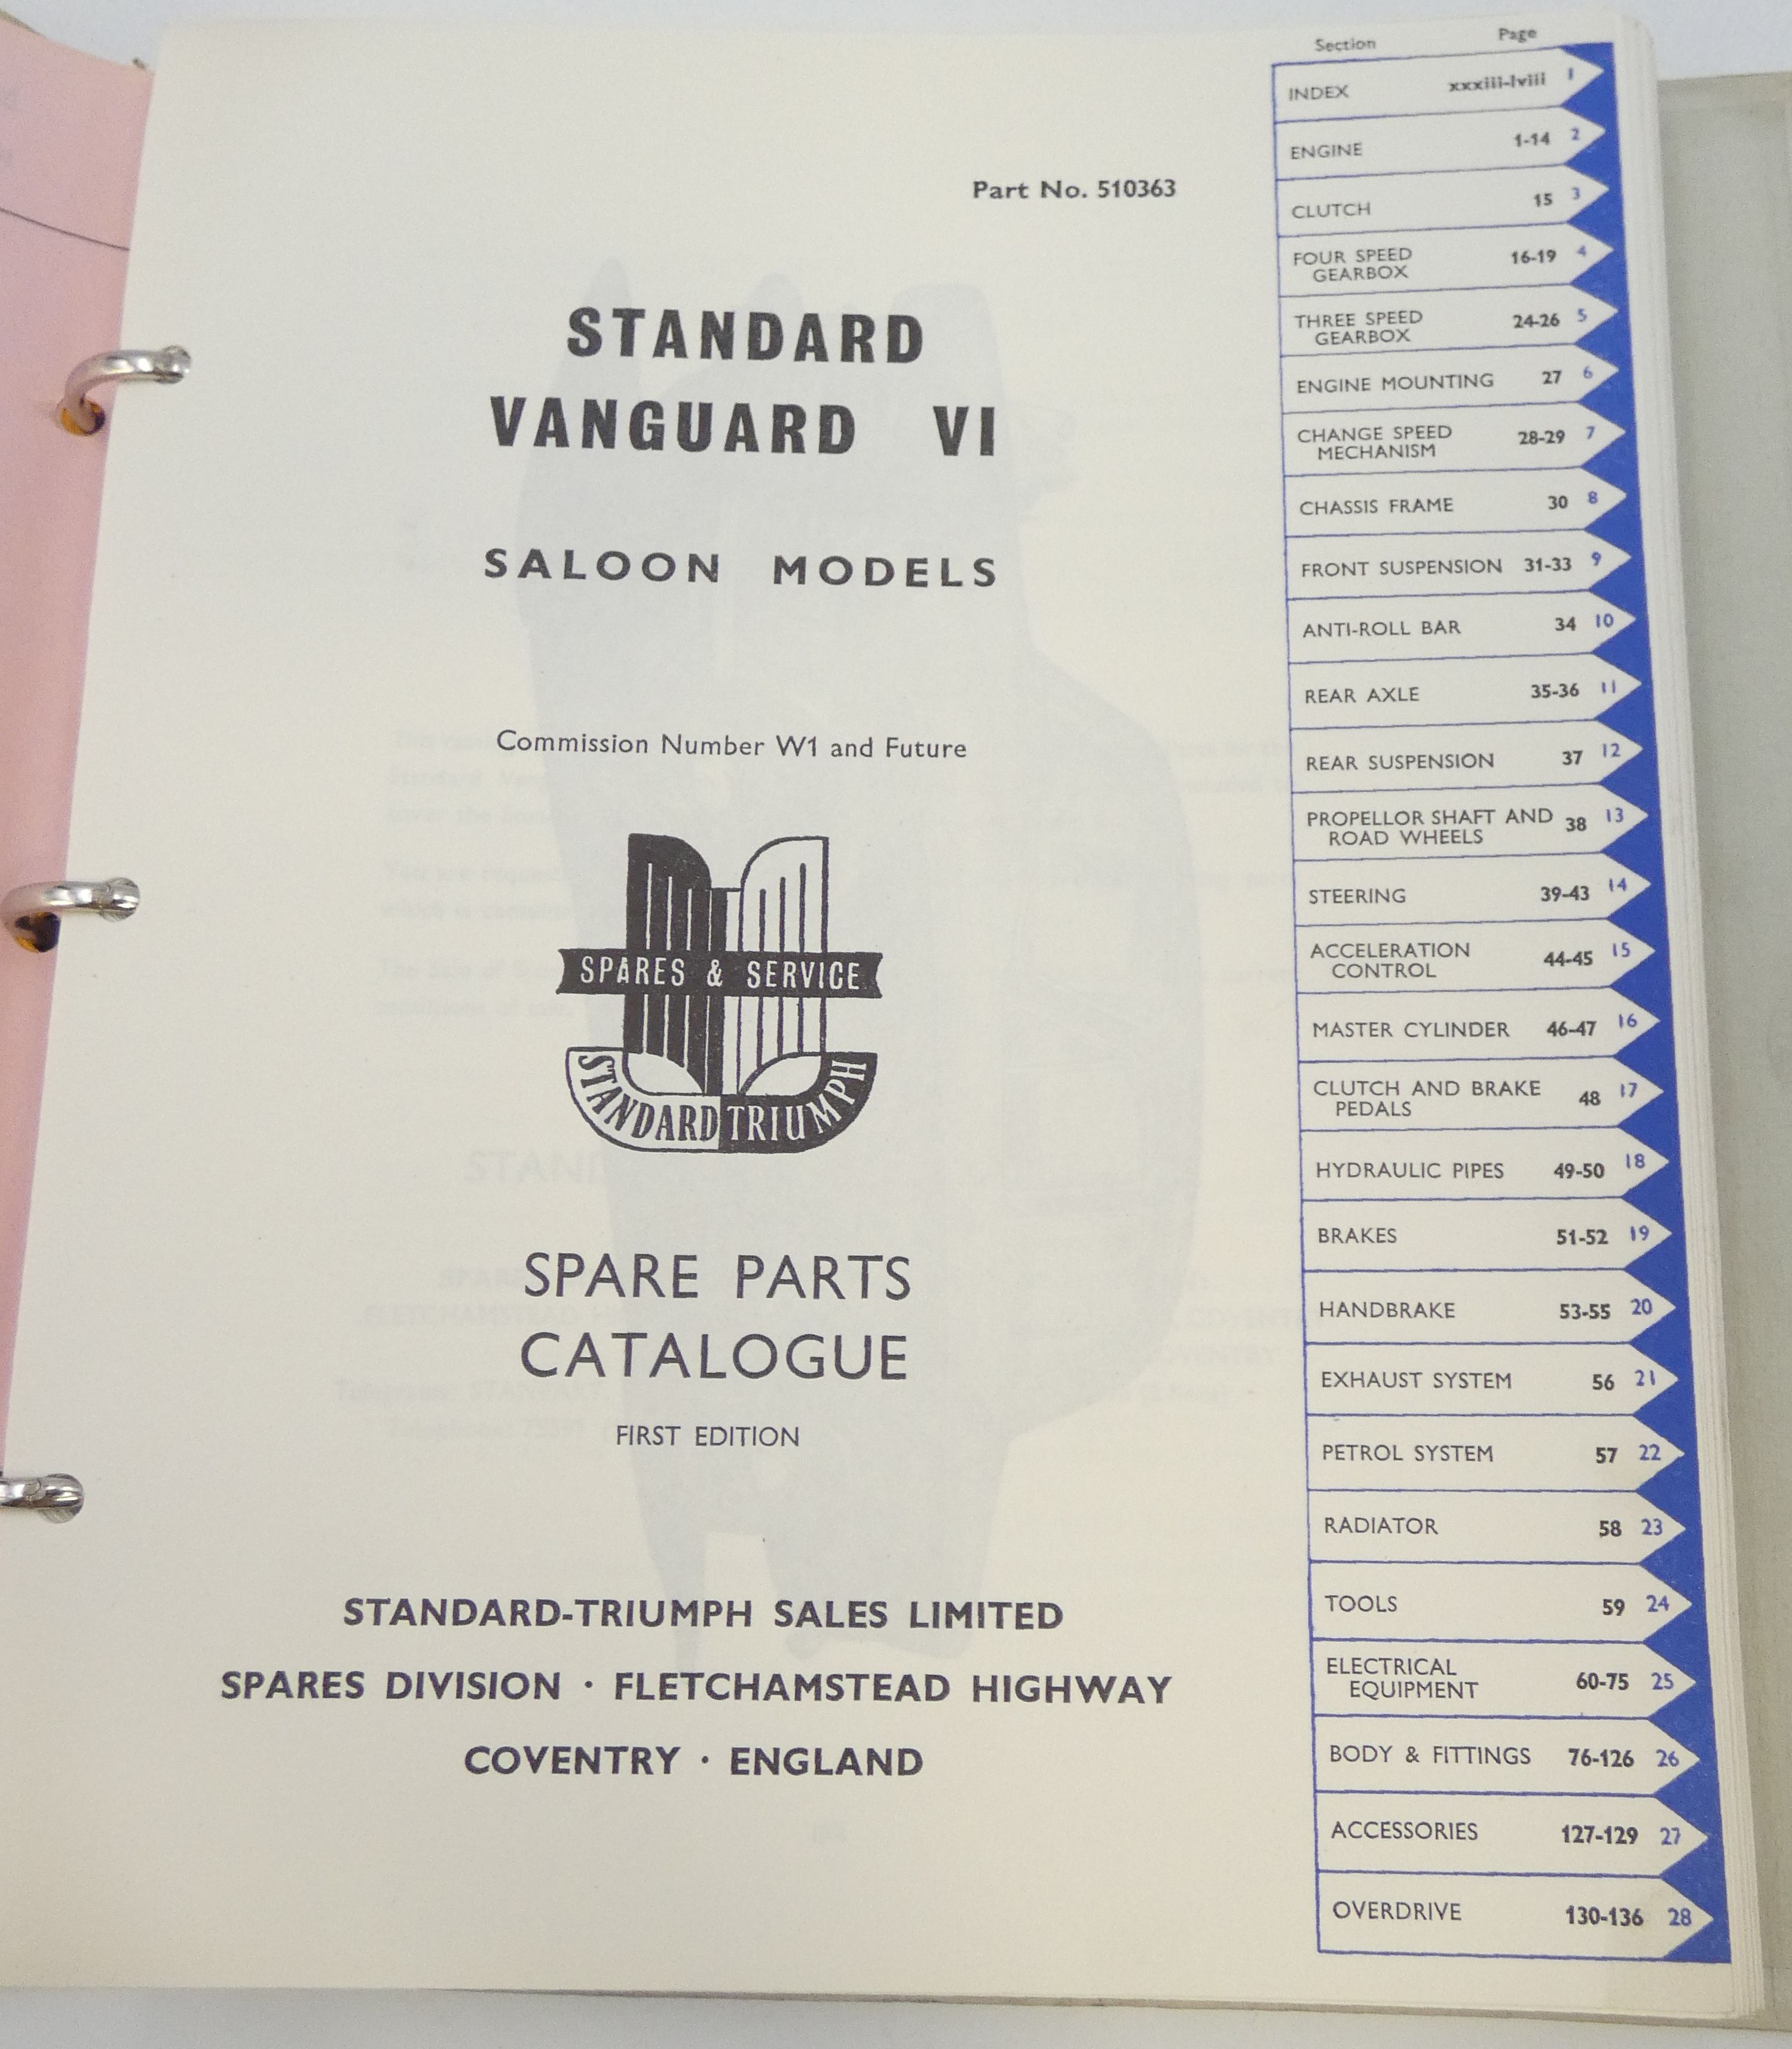 Standard Vanguard Six spare parts list